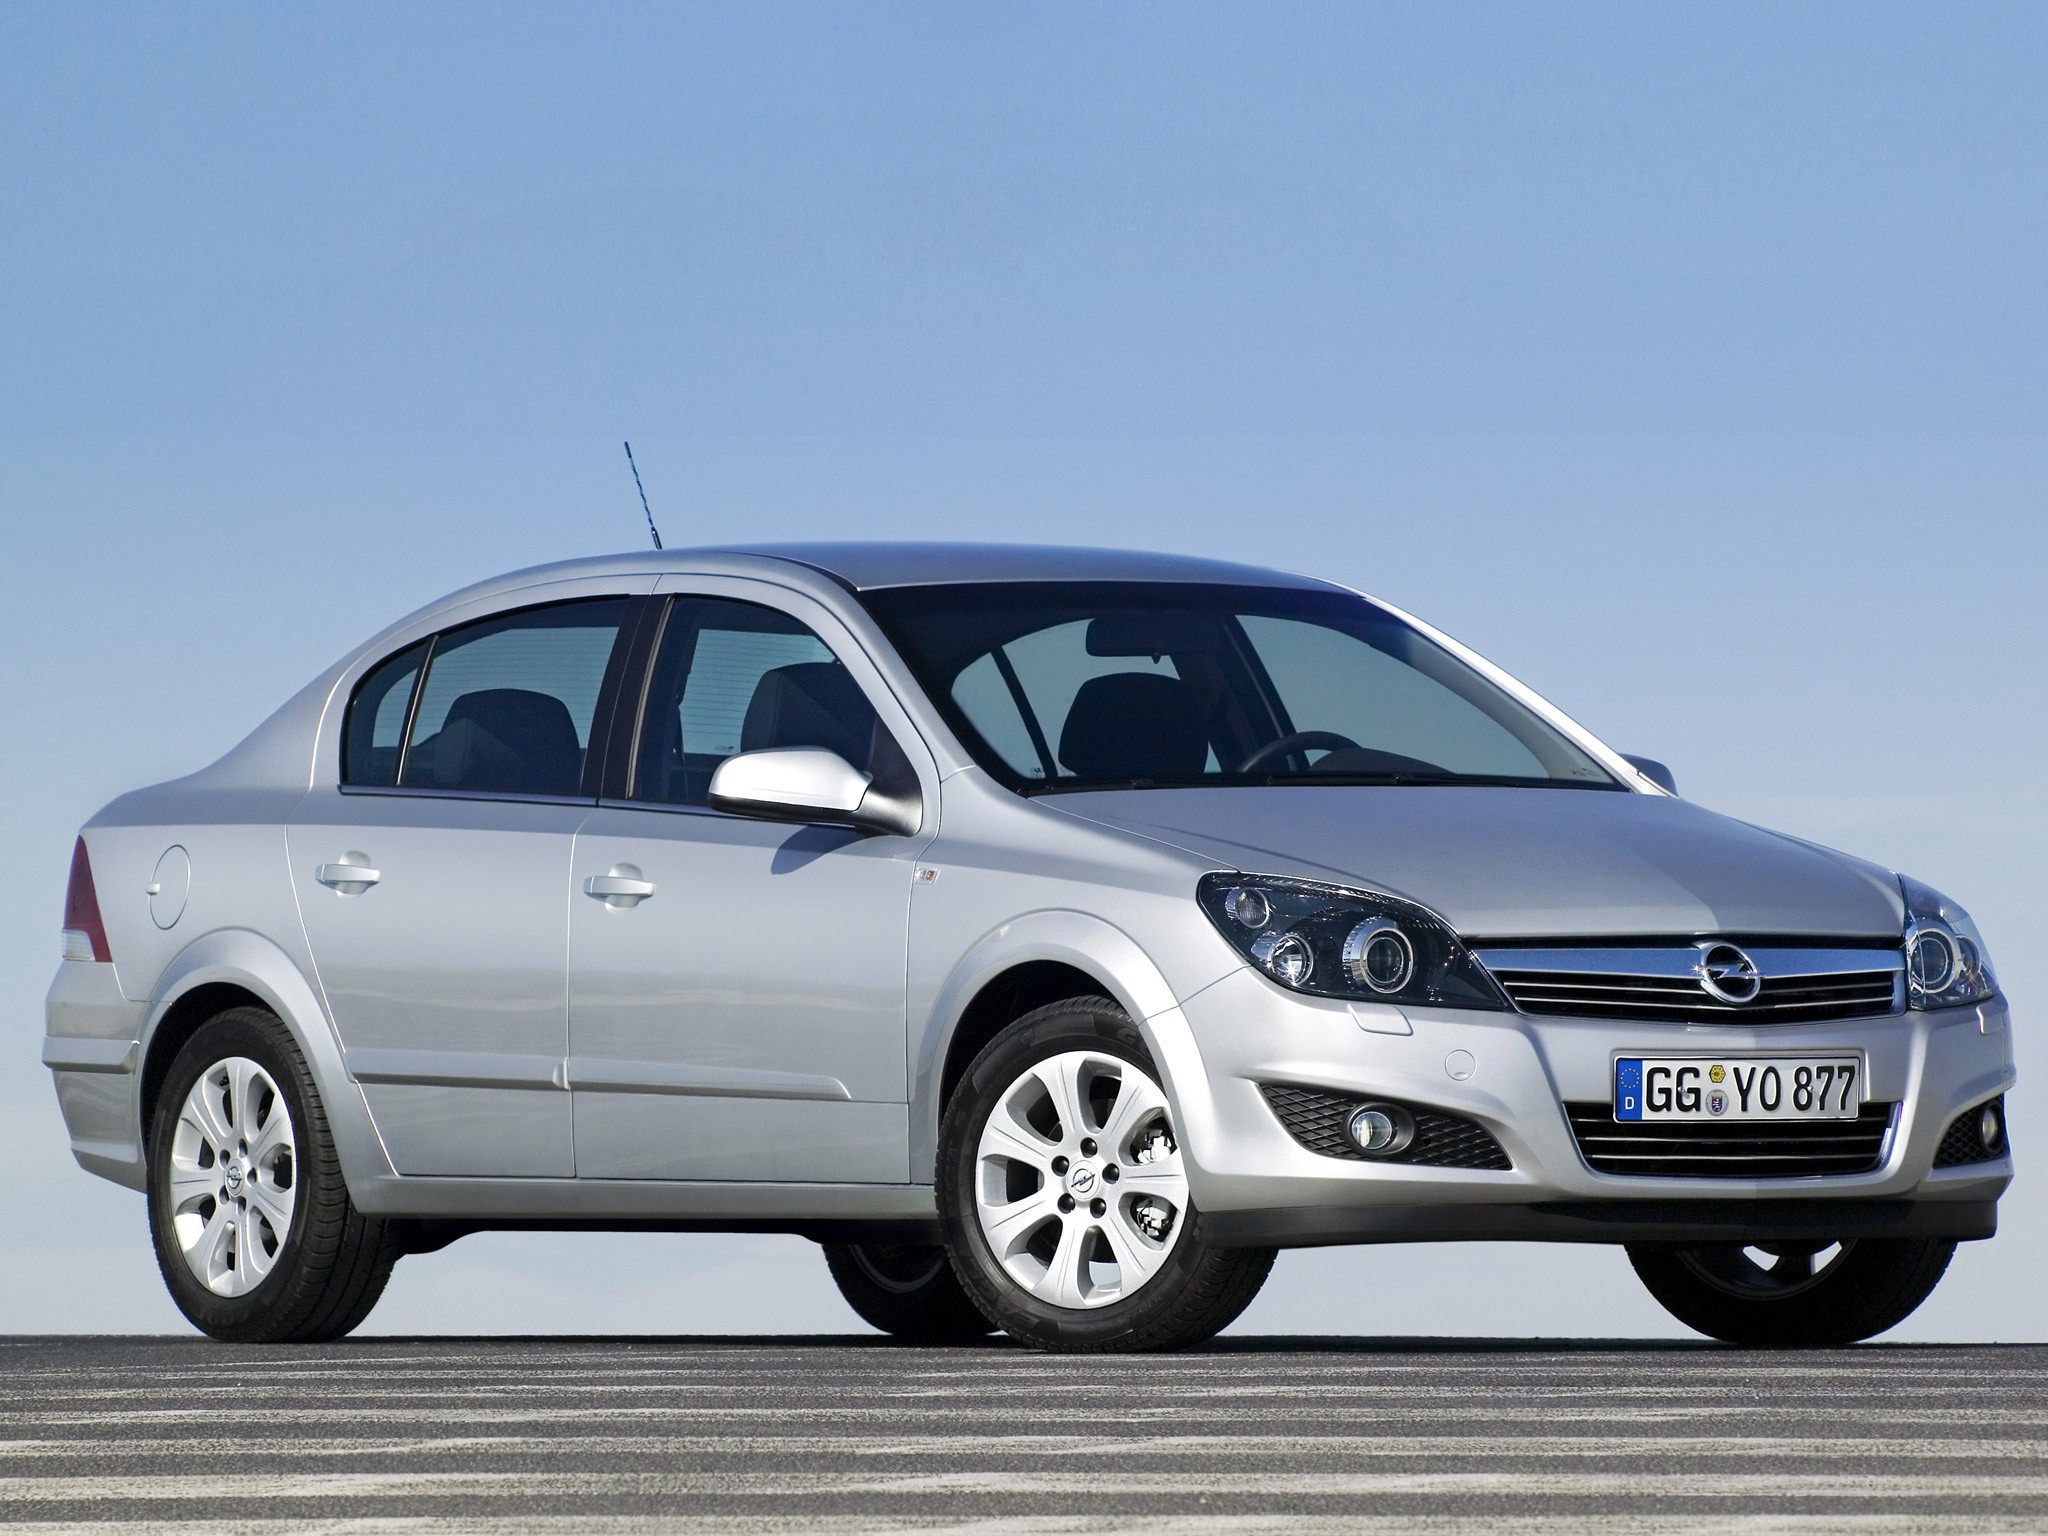 OPEL Astra Sedan - 2007, 2008, 2009 - autoevolution